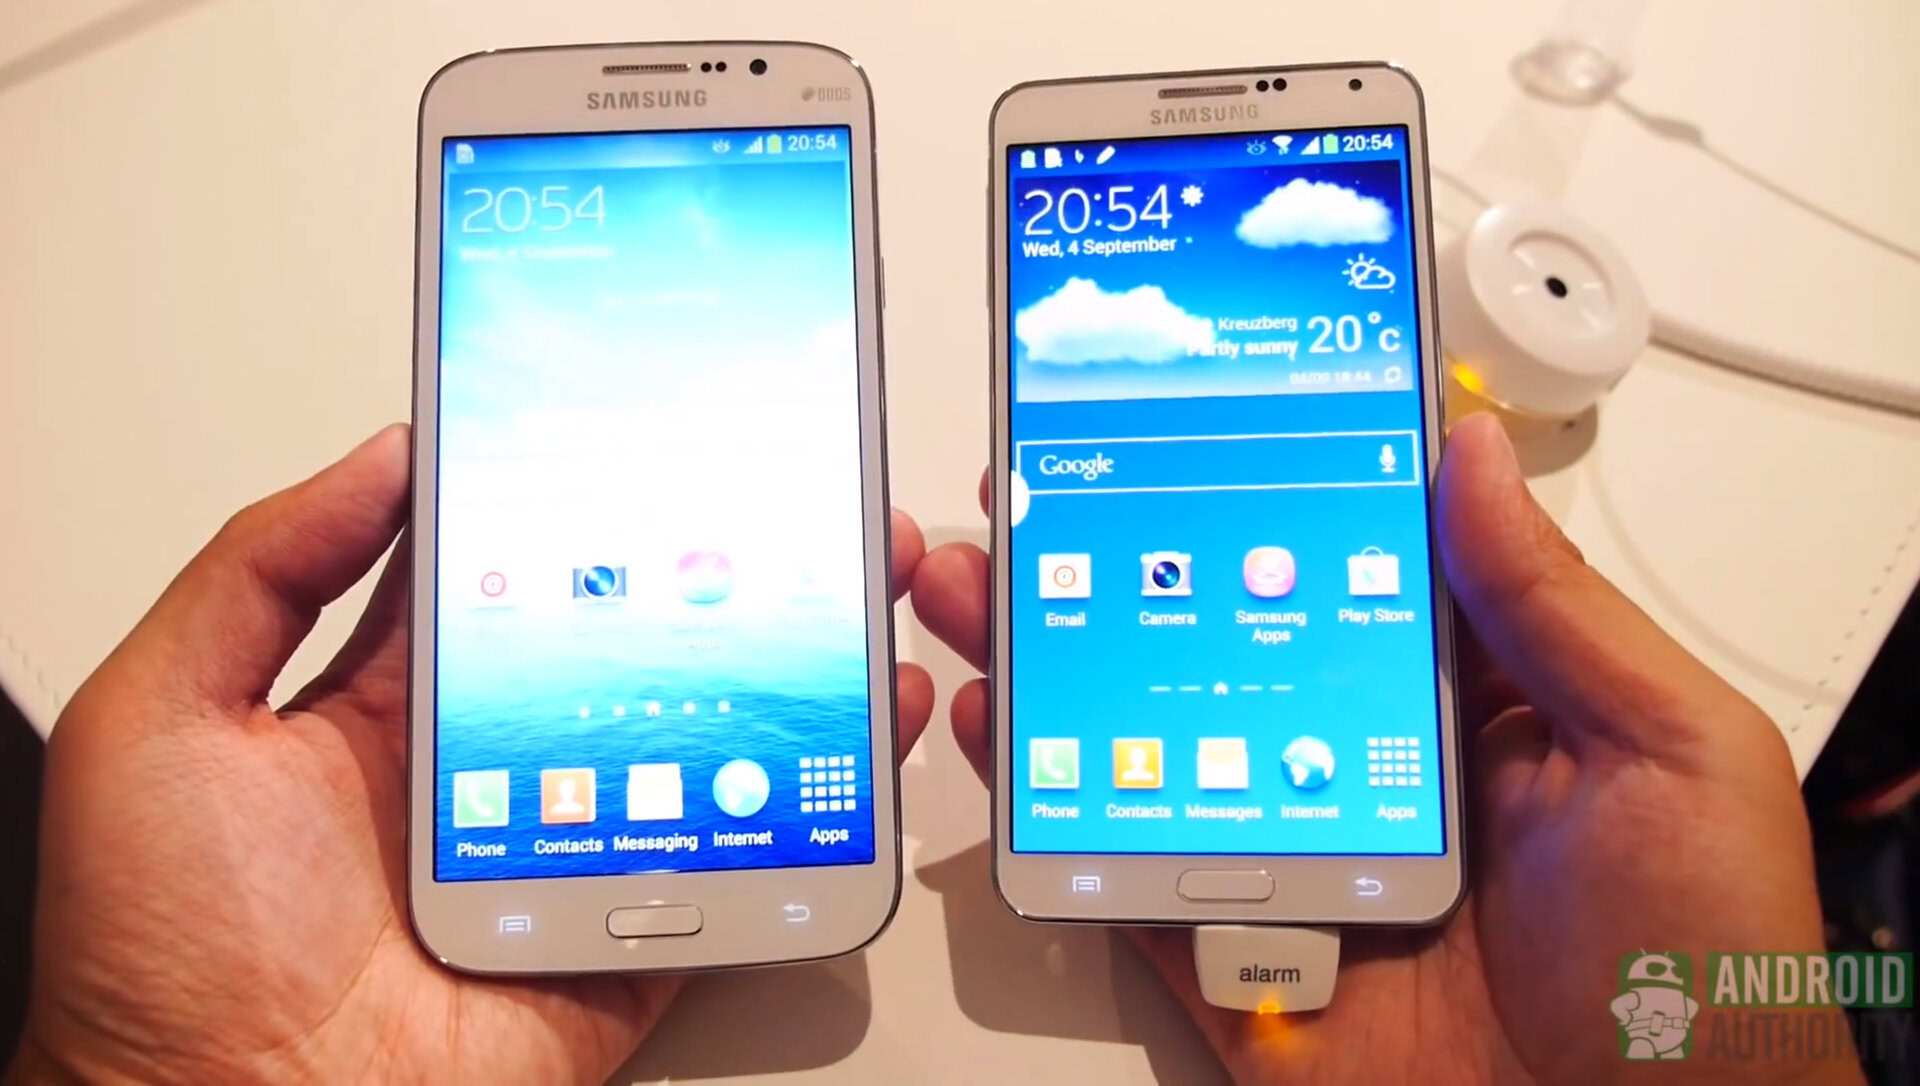 Galaxy Note 3 vs Galaxy Mega 5.8 fron hands on